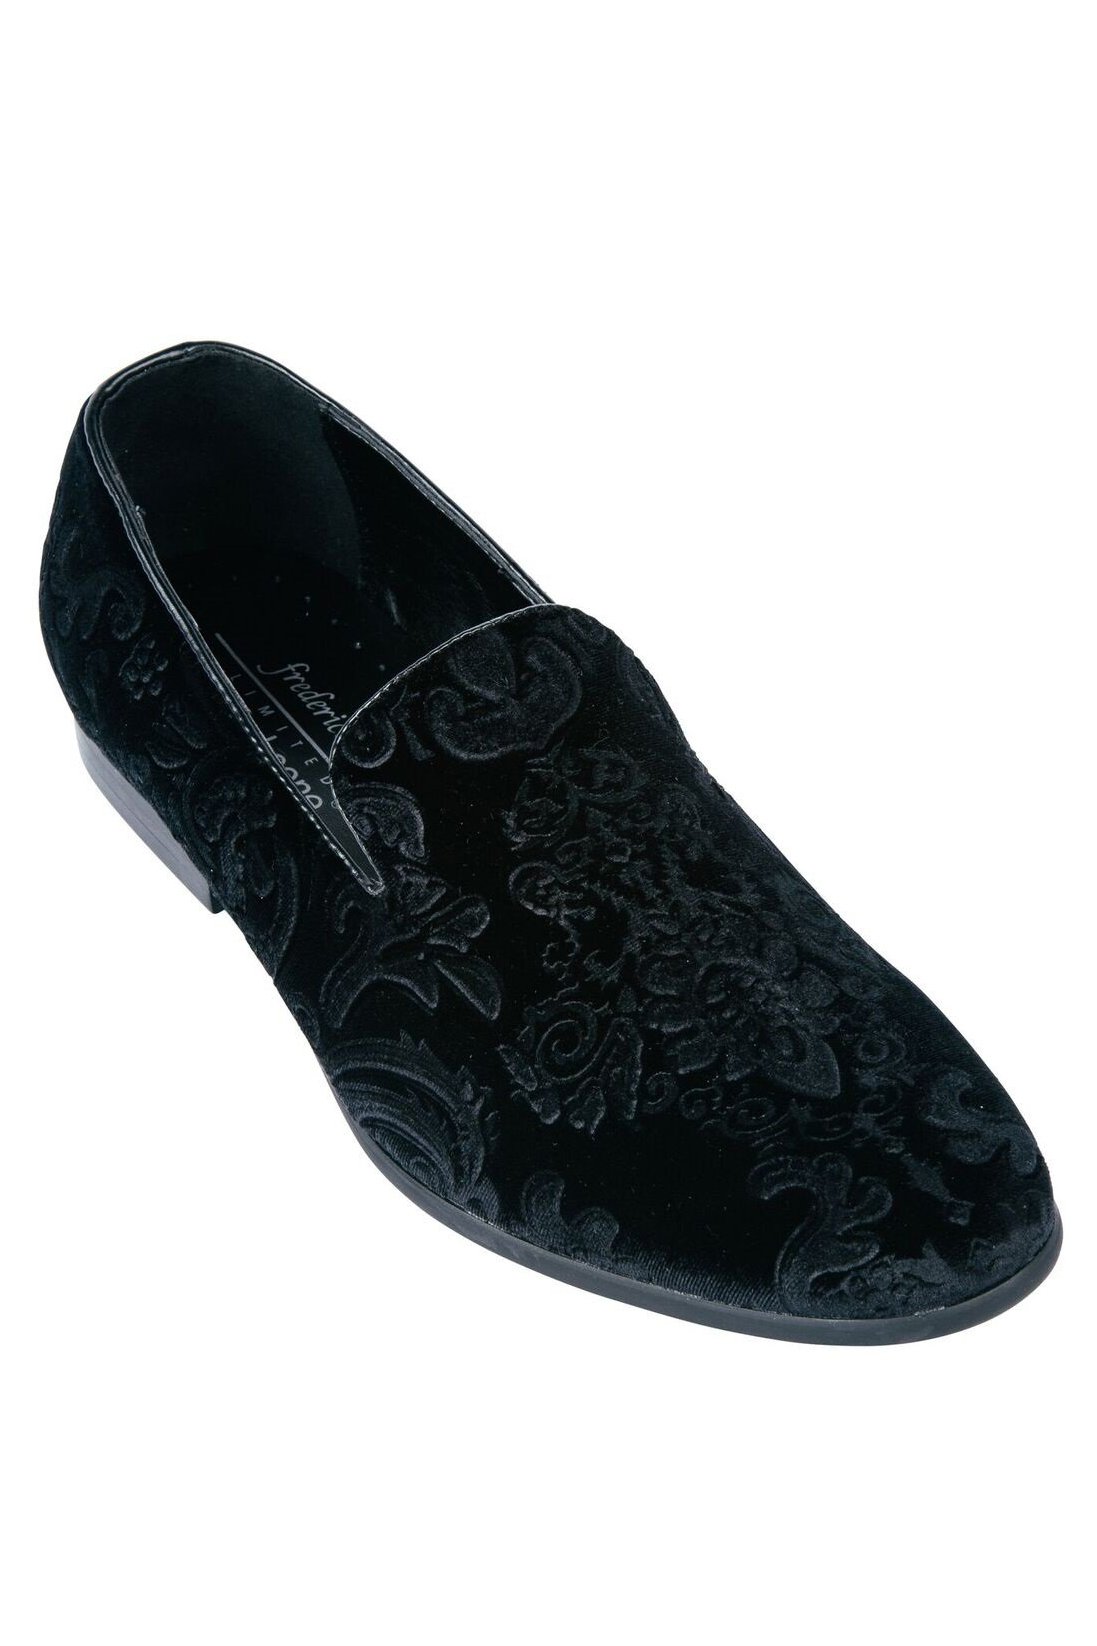 Frederico Leone "Marcel" Black Velvet Frederico Leone Tuxedo Shoes